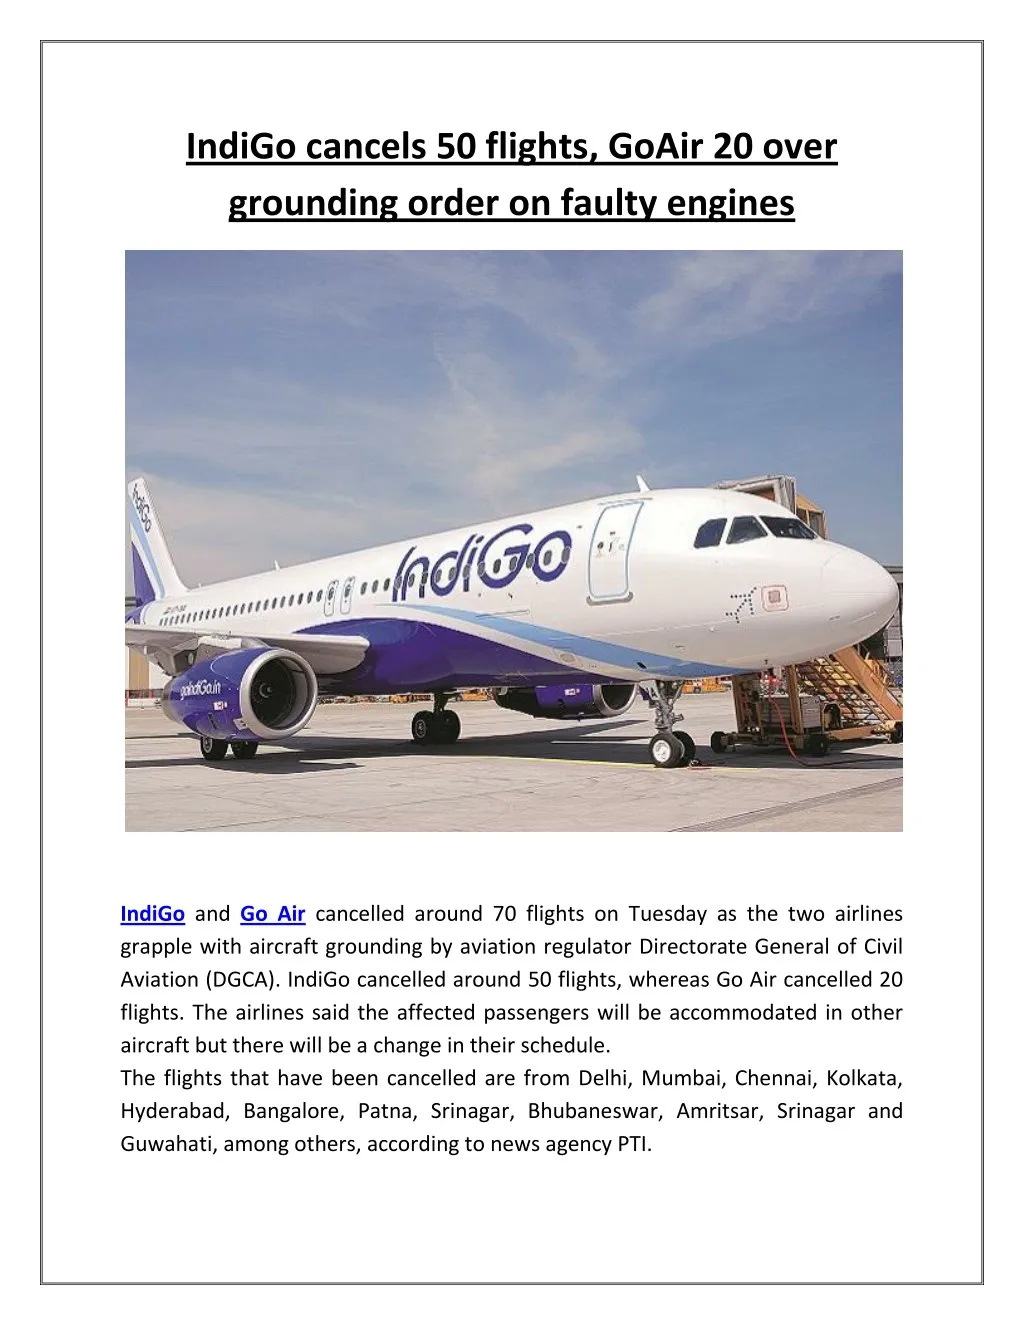 indigo cancels 50 flights goair 20 over grounding